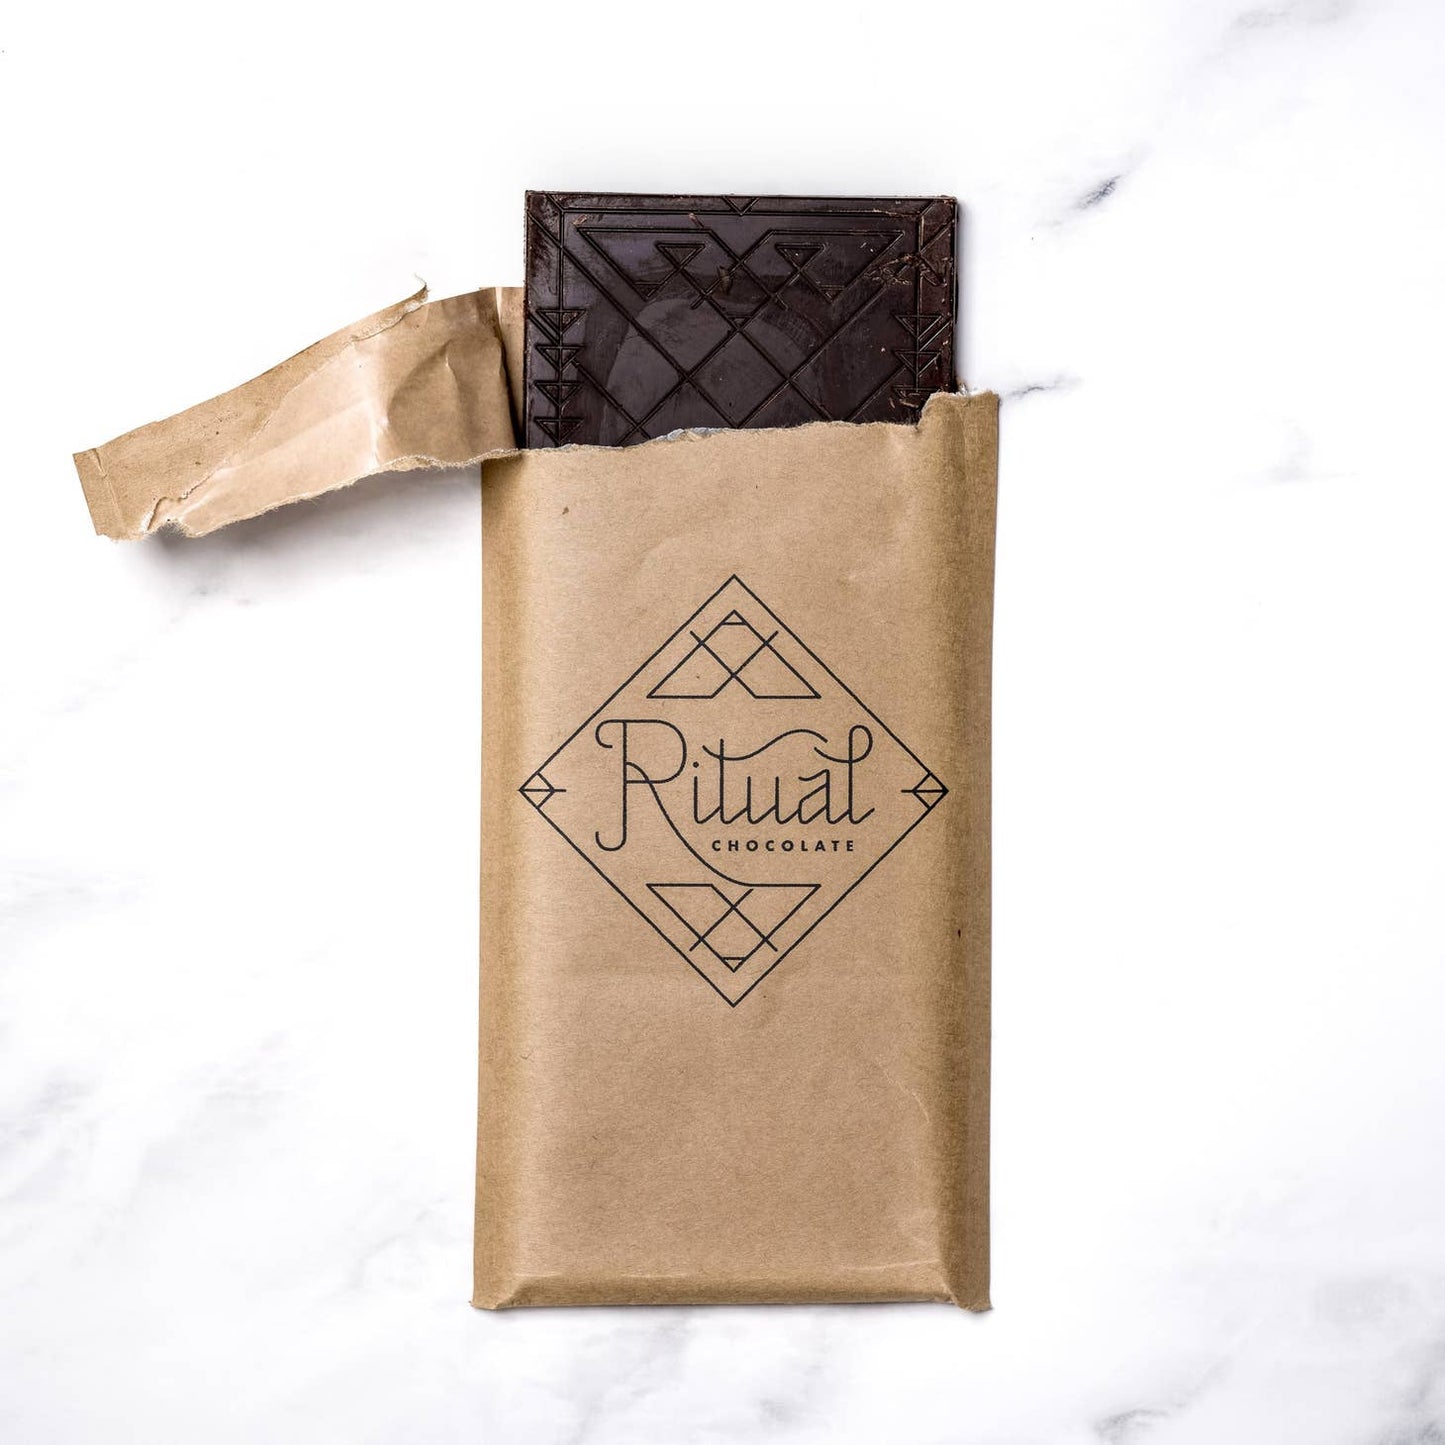 Ritual Chocolate - Belize 70% Cacao